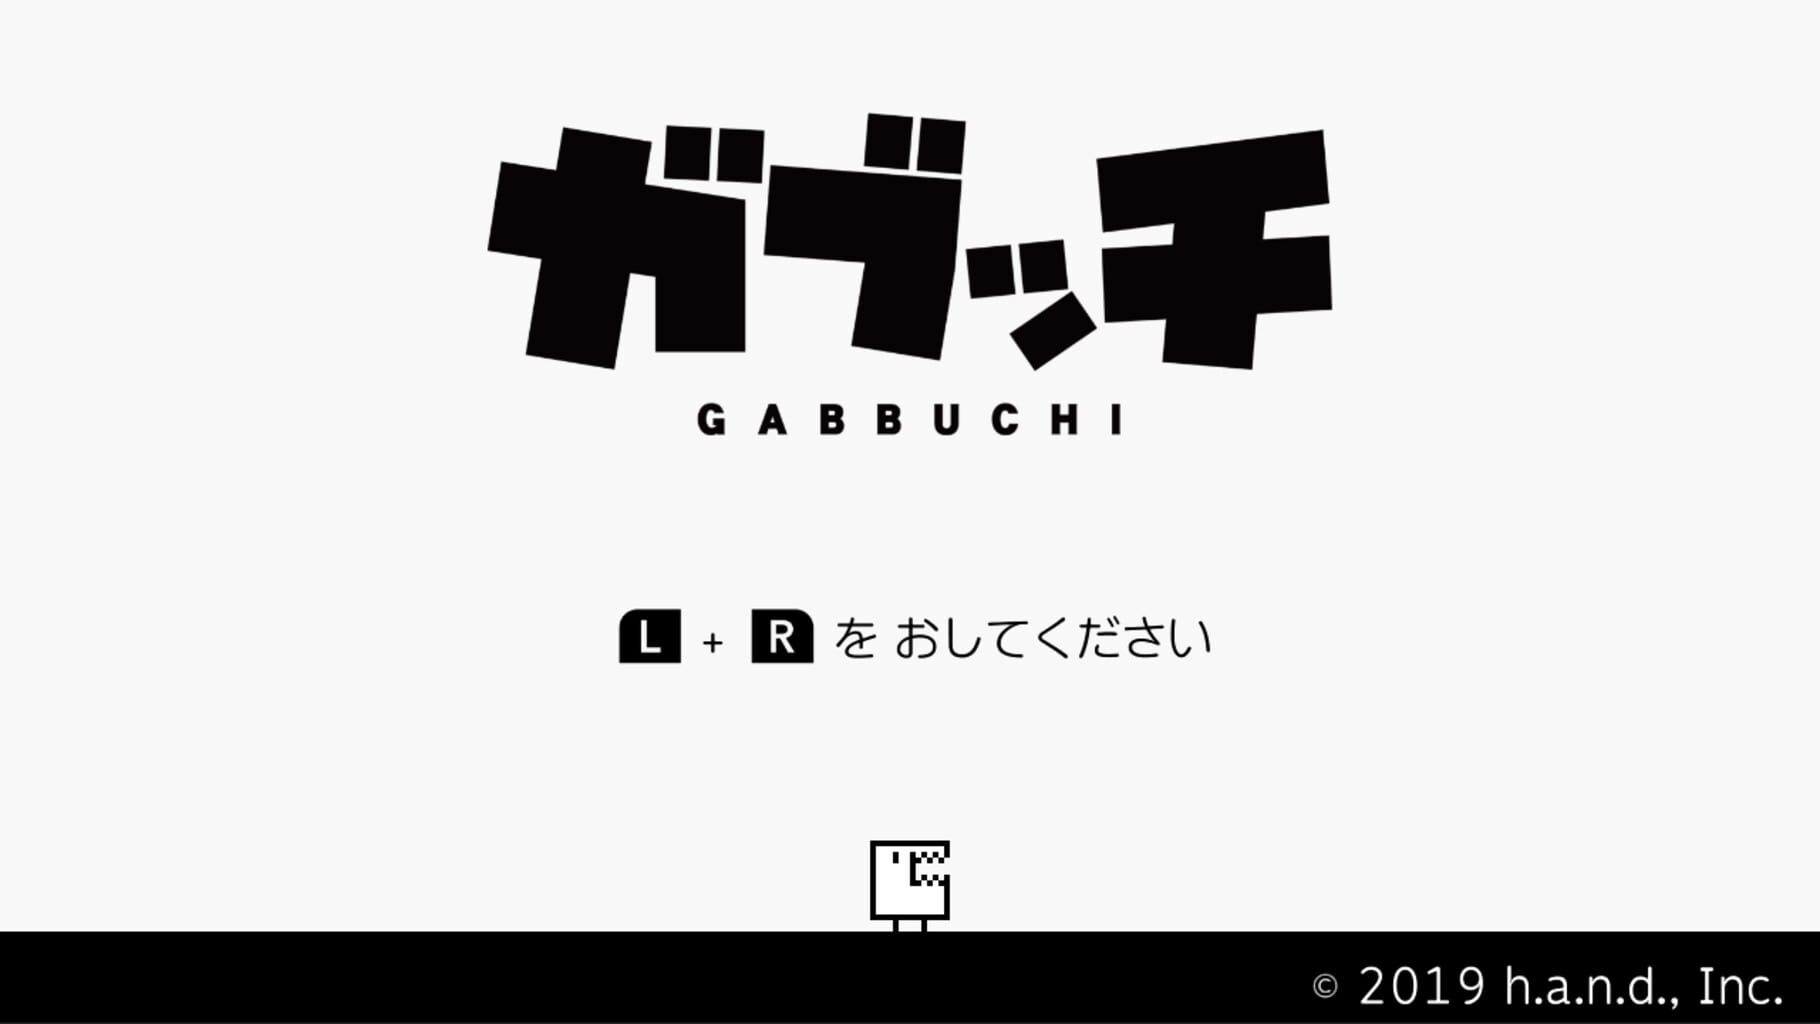 Gabbuchi screenshot